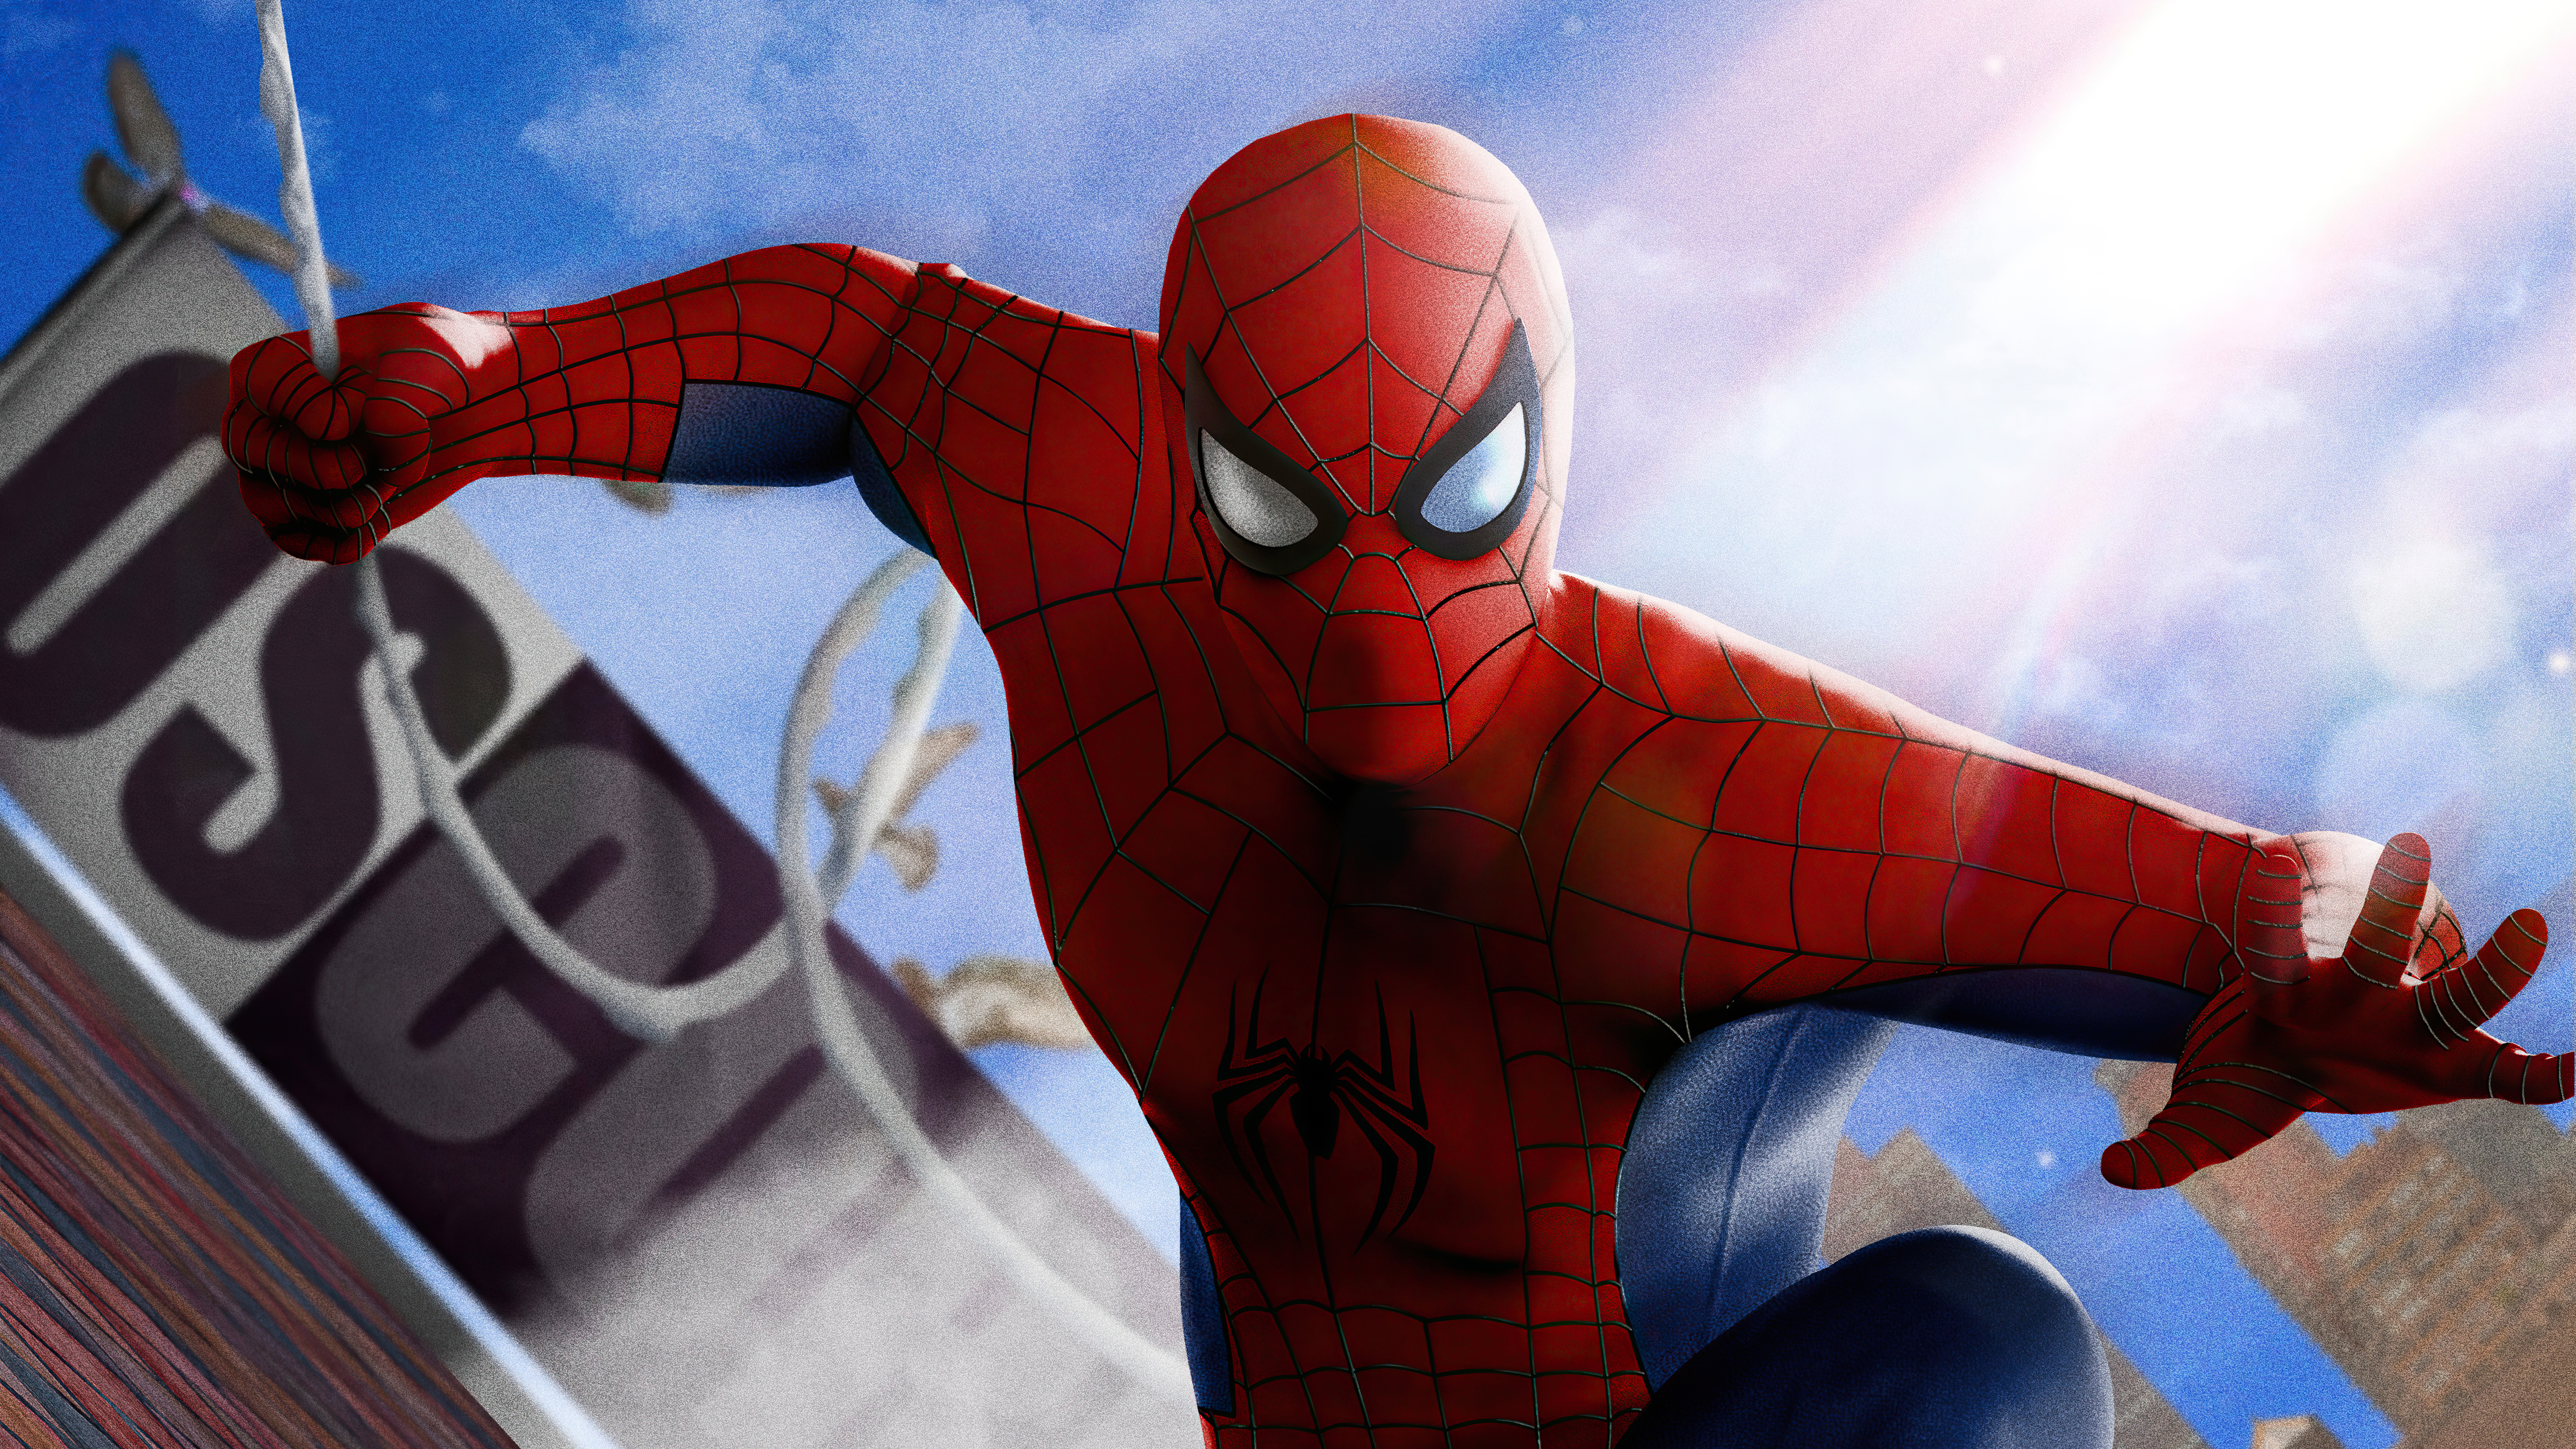 Spider Man 4k Ultra HD Wallpaper Background Image 5120x2880